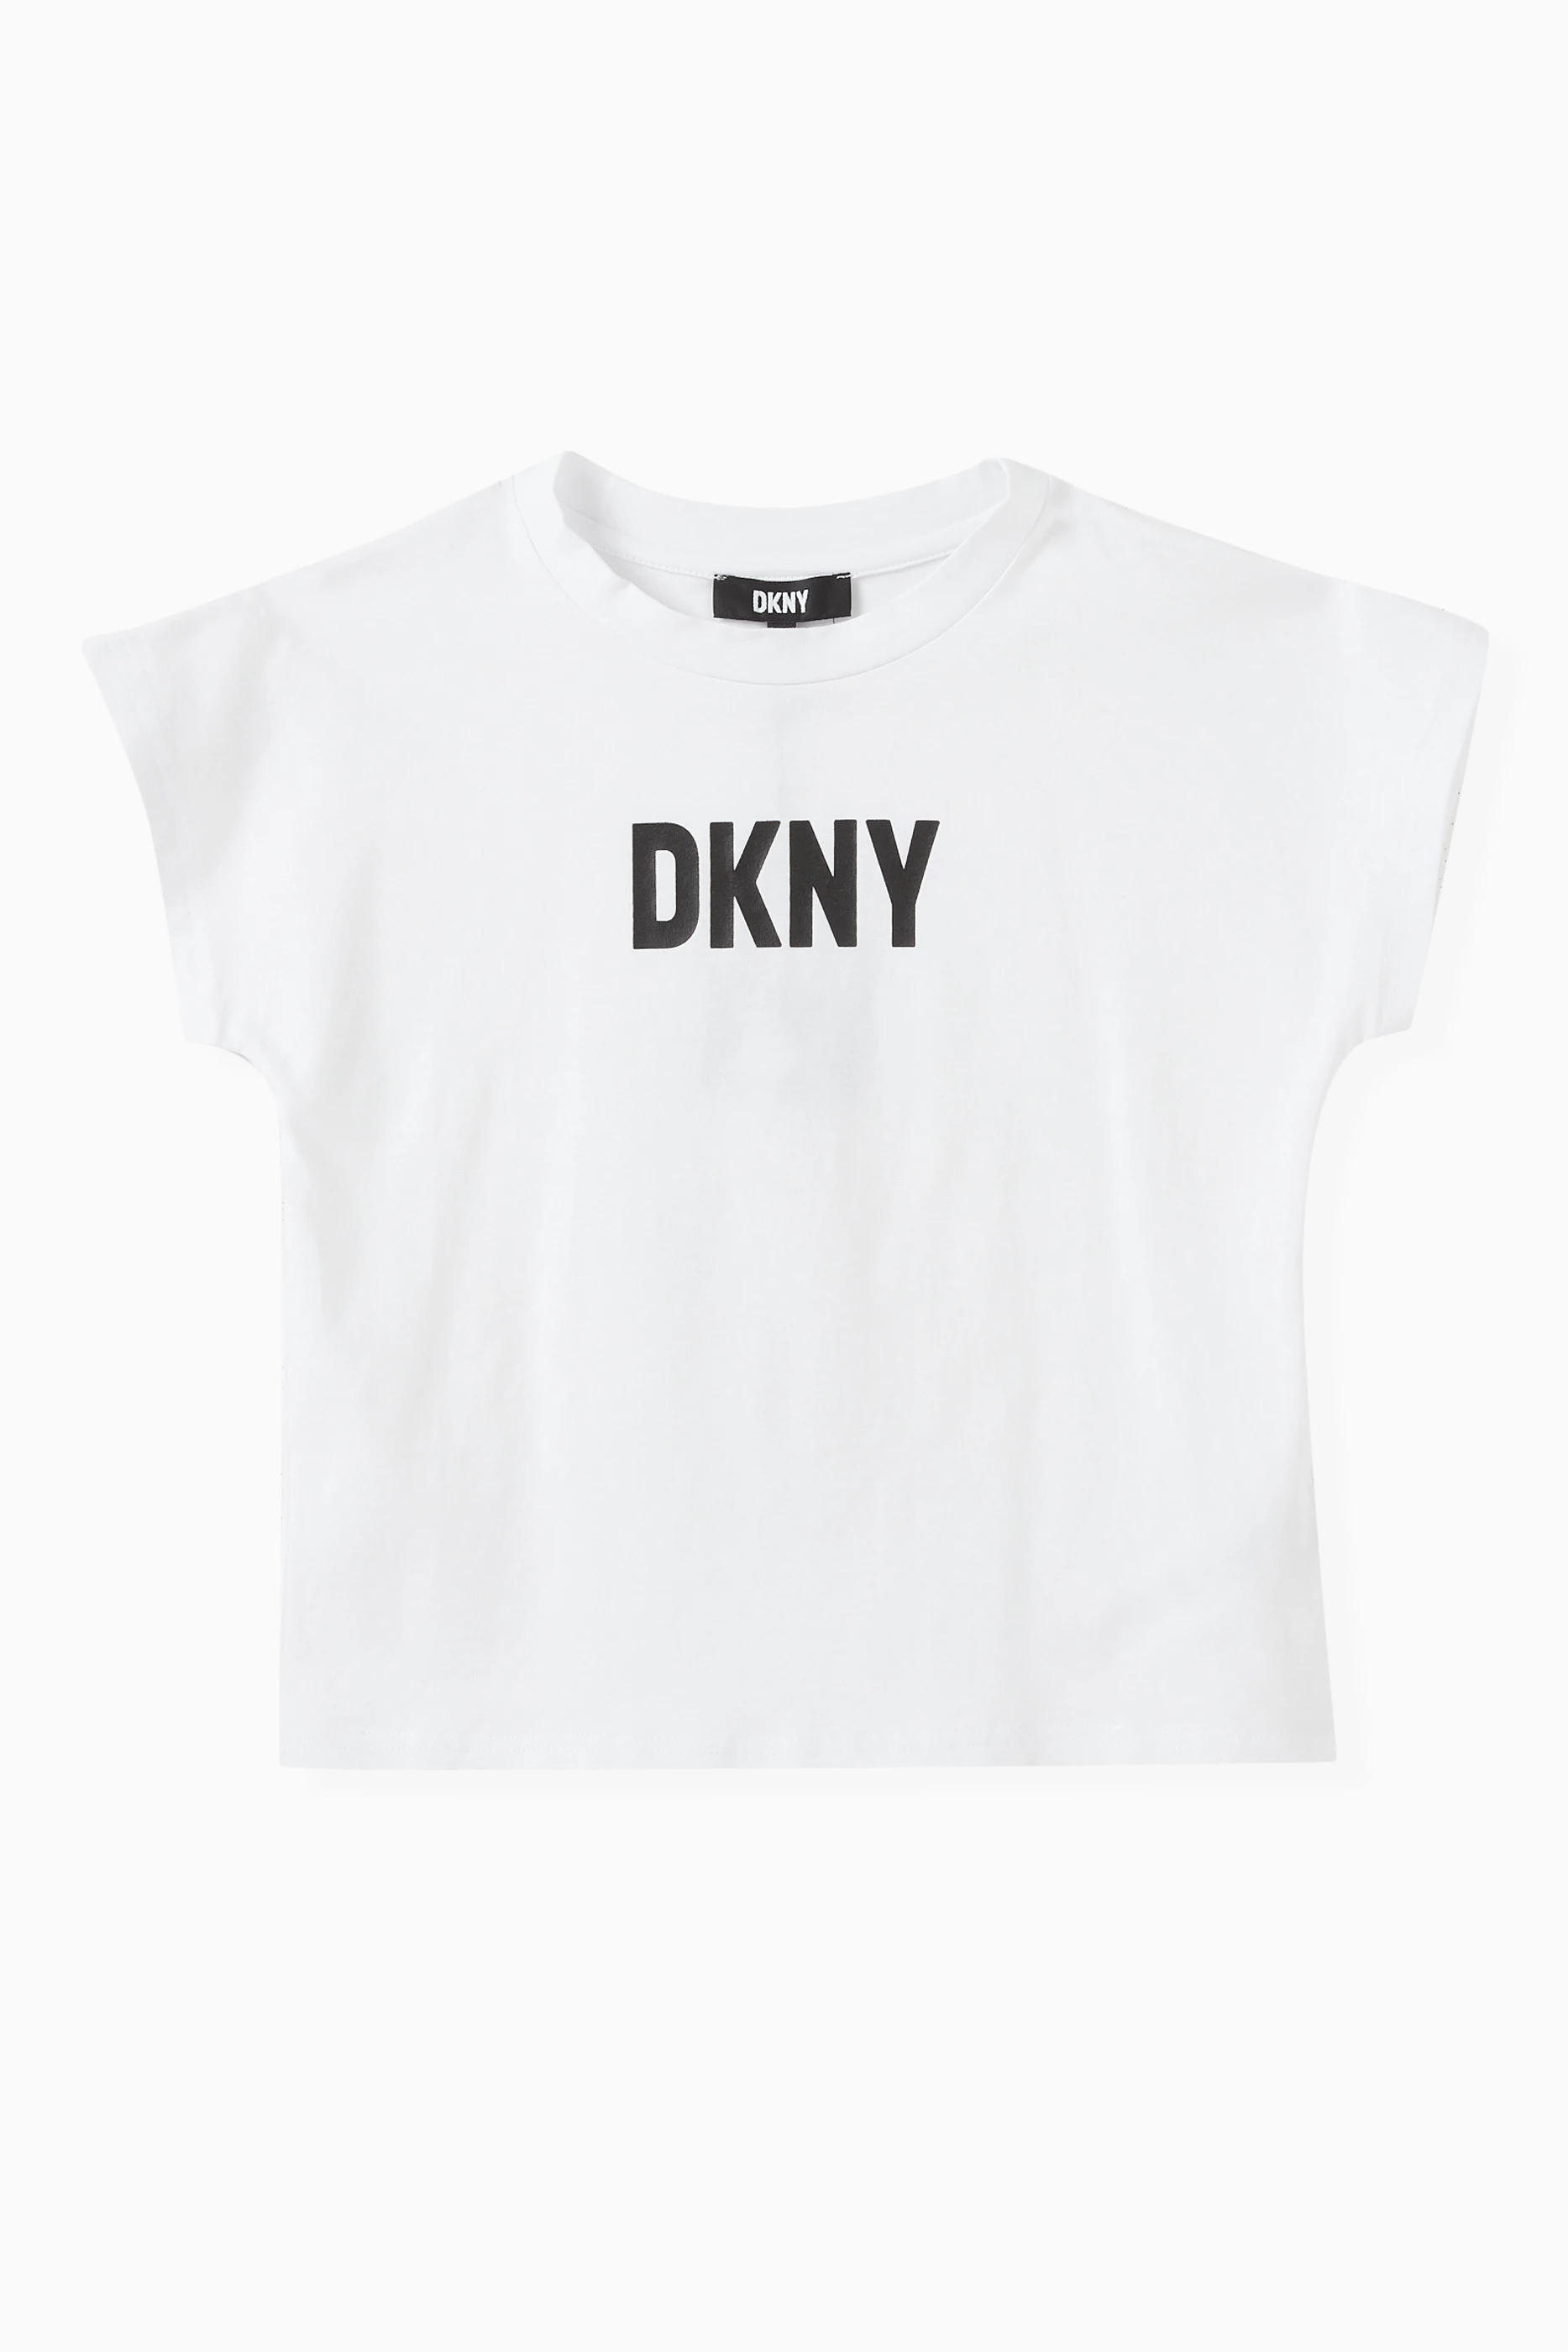 Buy DKNY White Logo T-Shirt in Cotton for Girls in UAE